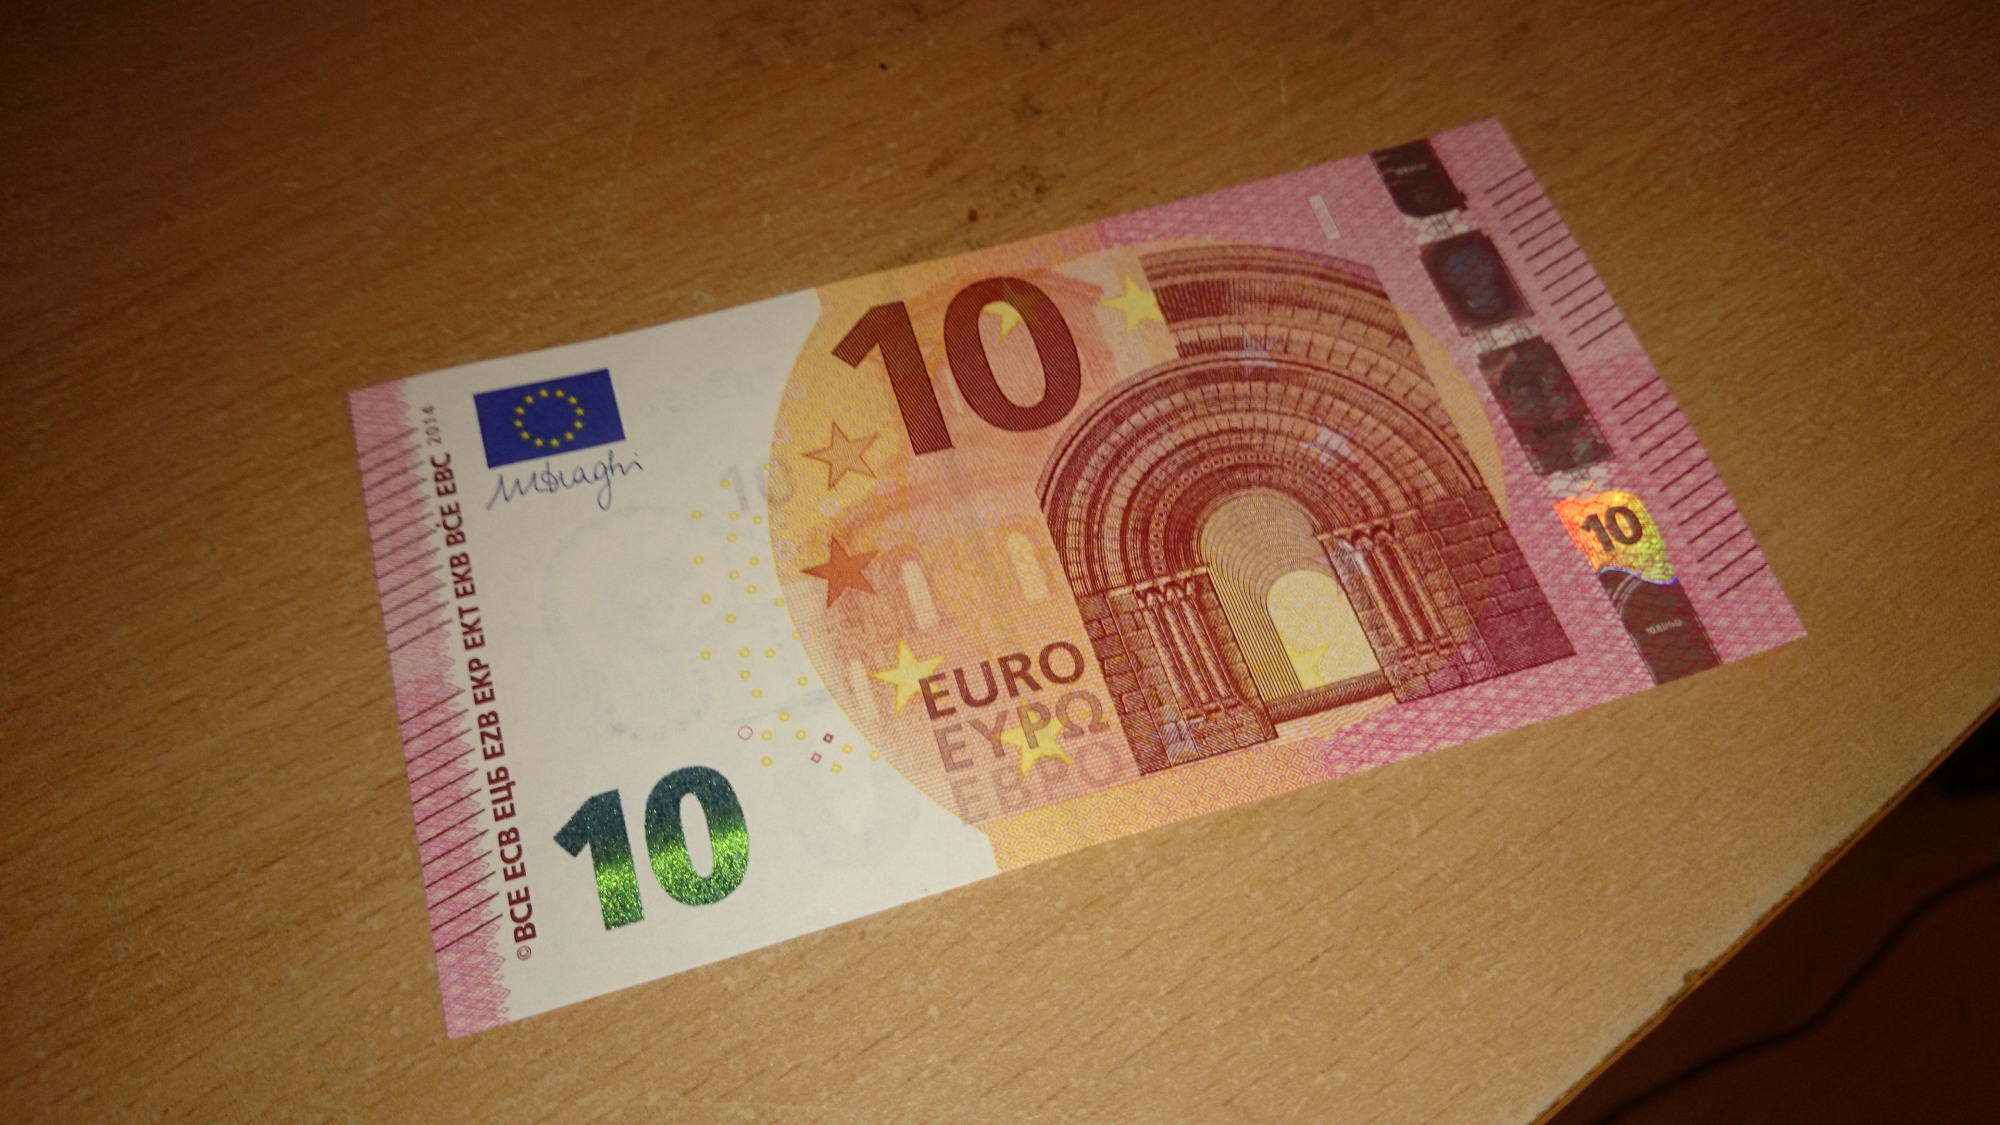 Фото 10 евро с двух сторон